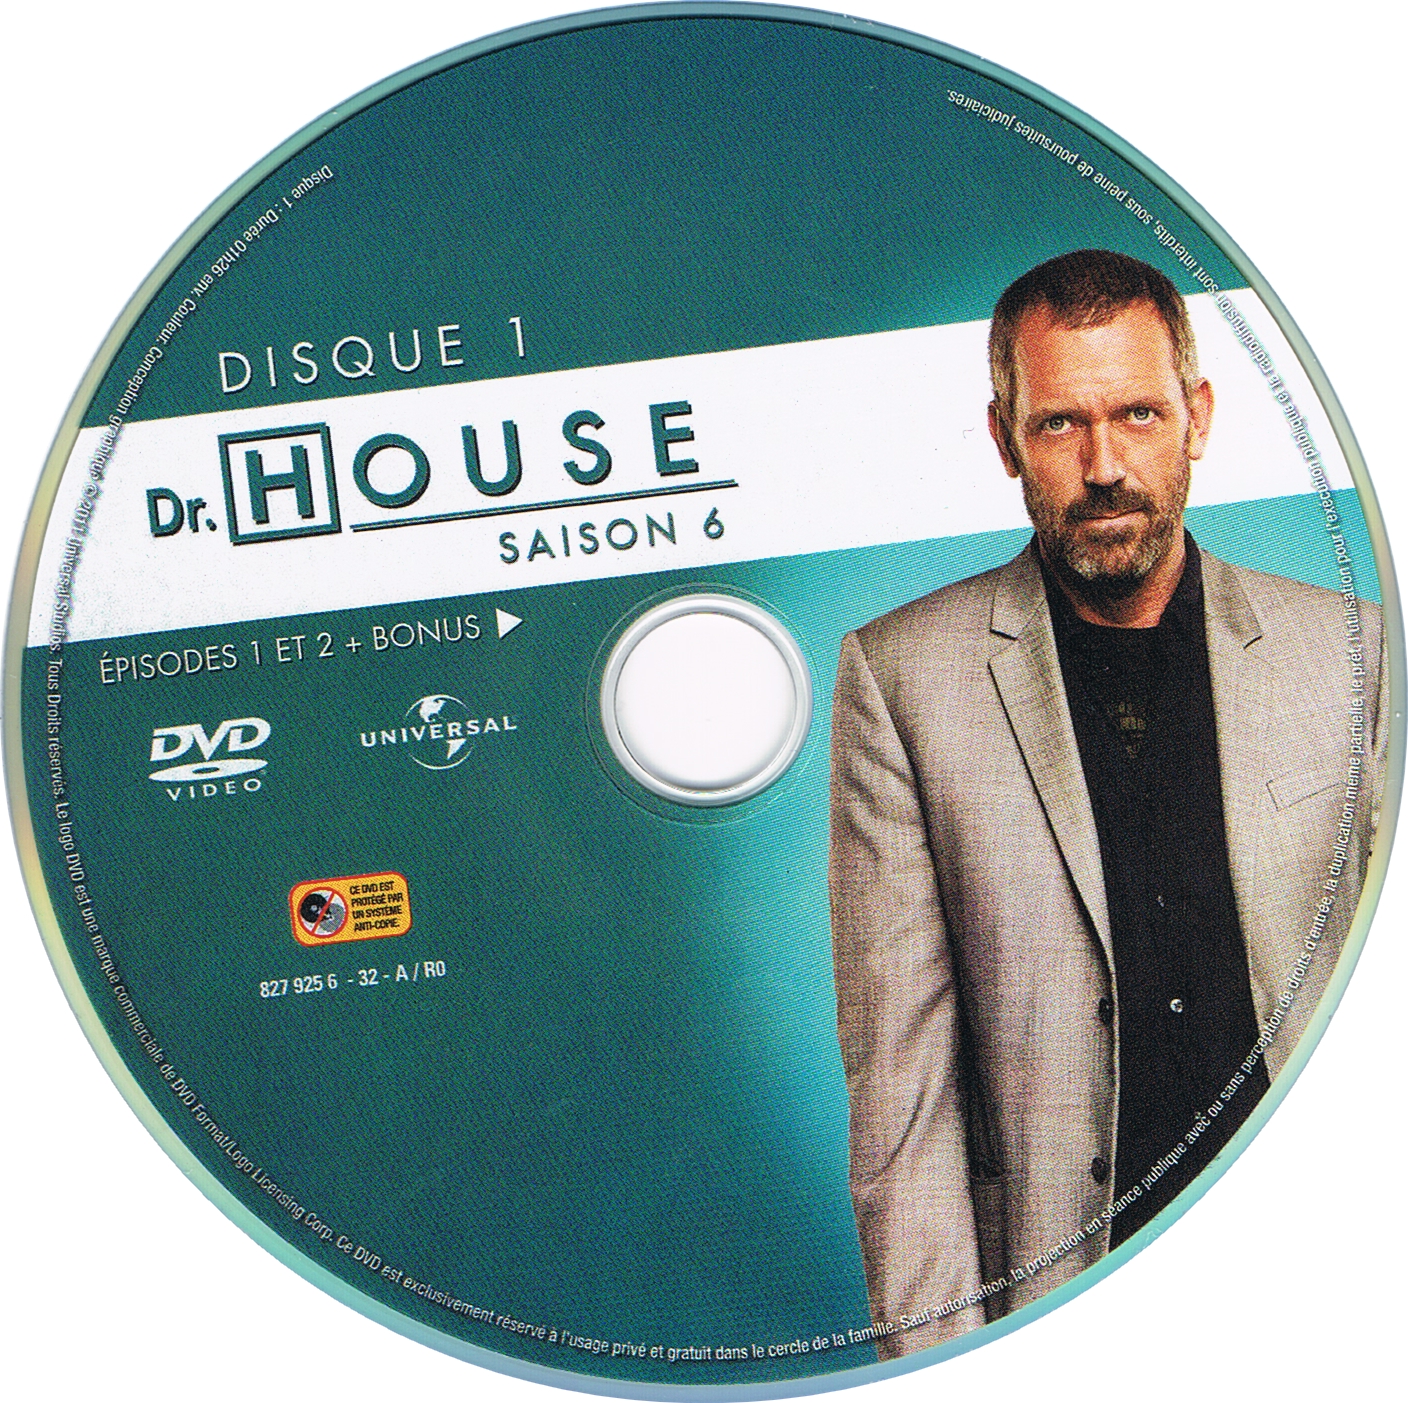 Dr House Saison 6 DVD 1